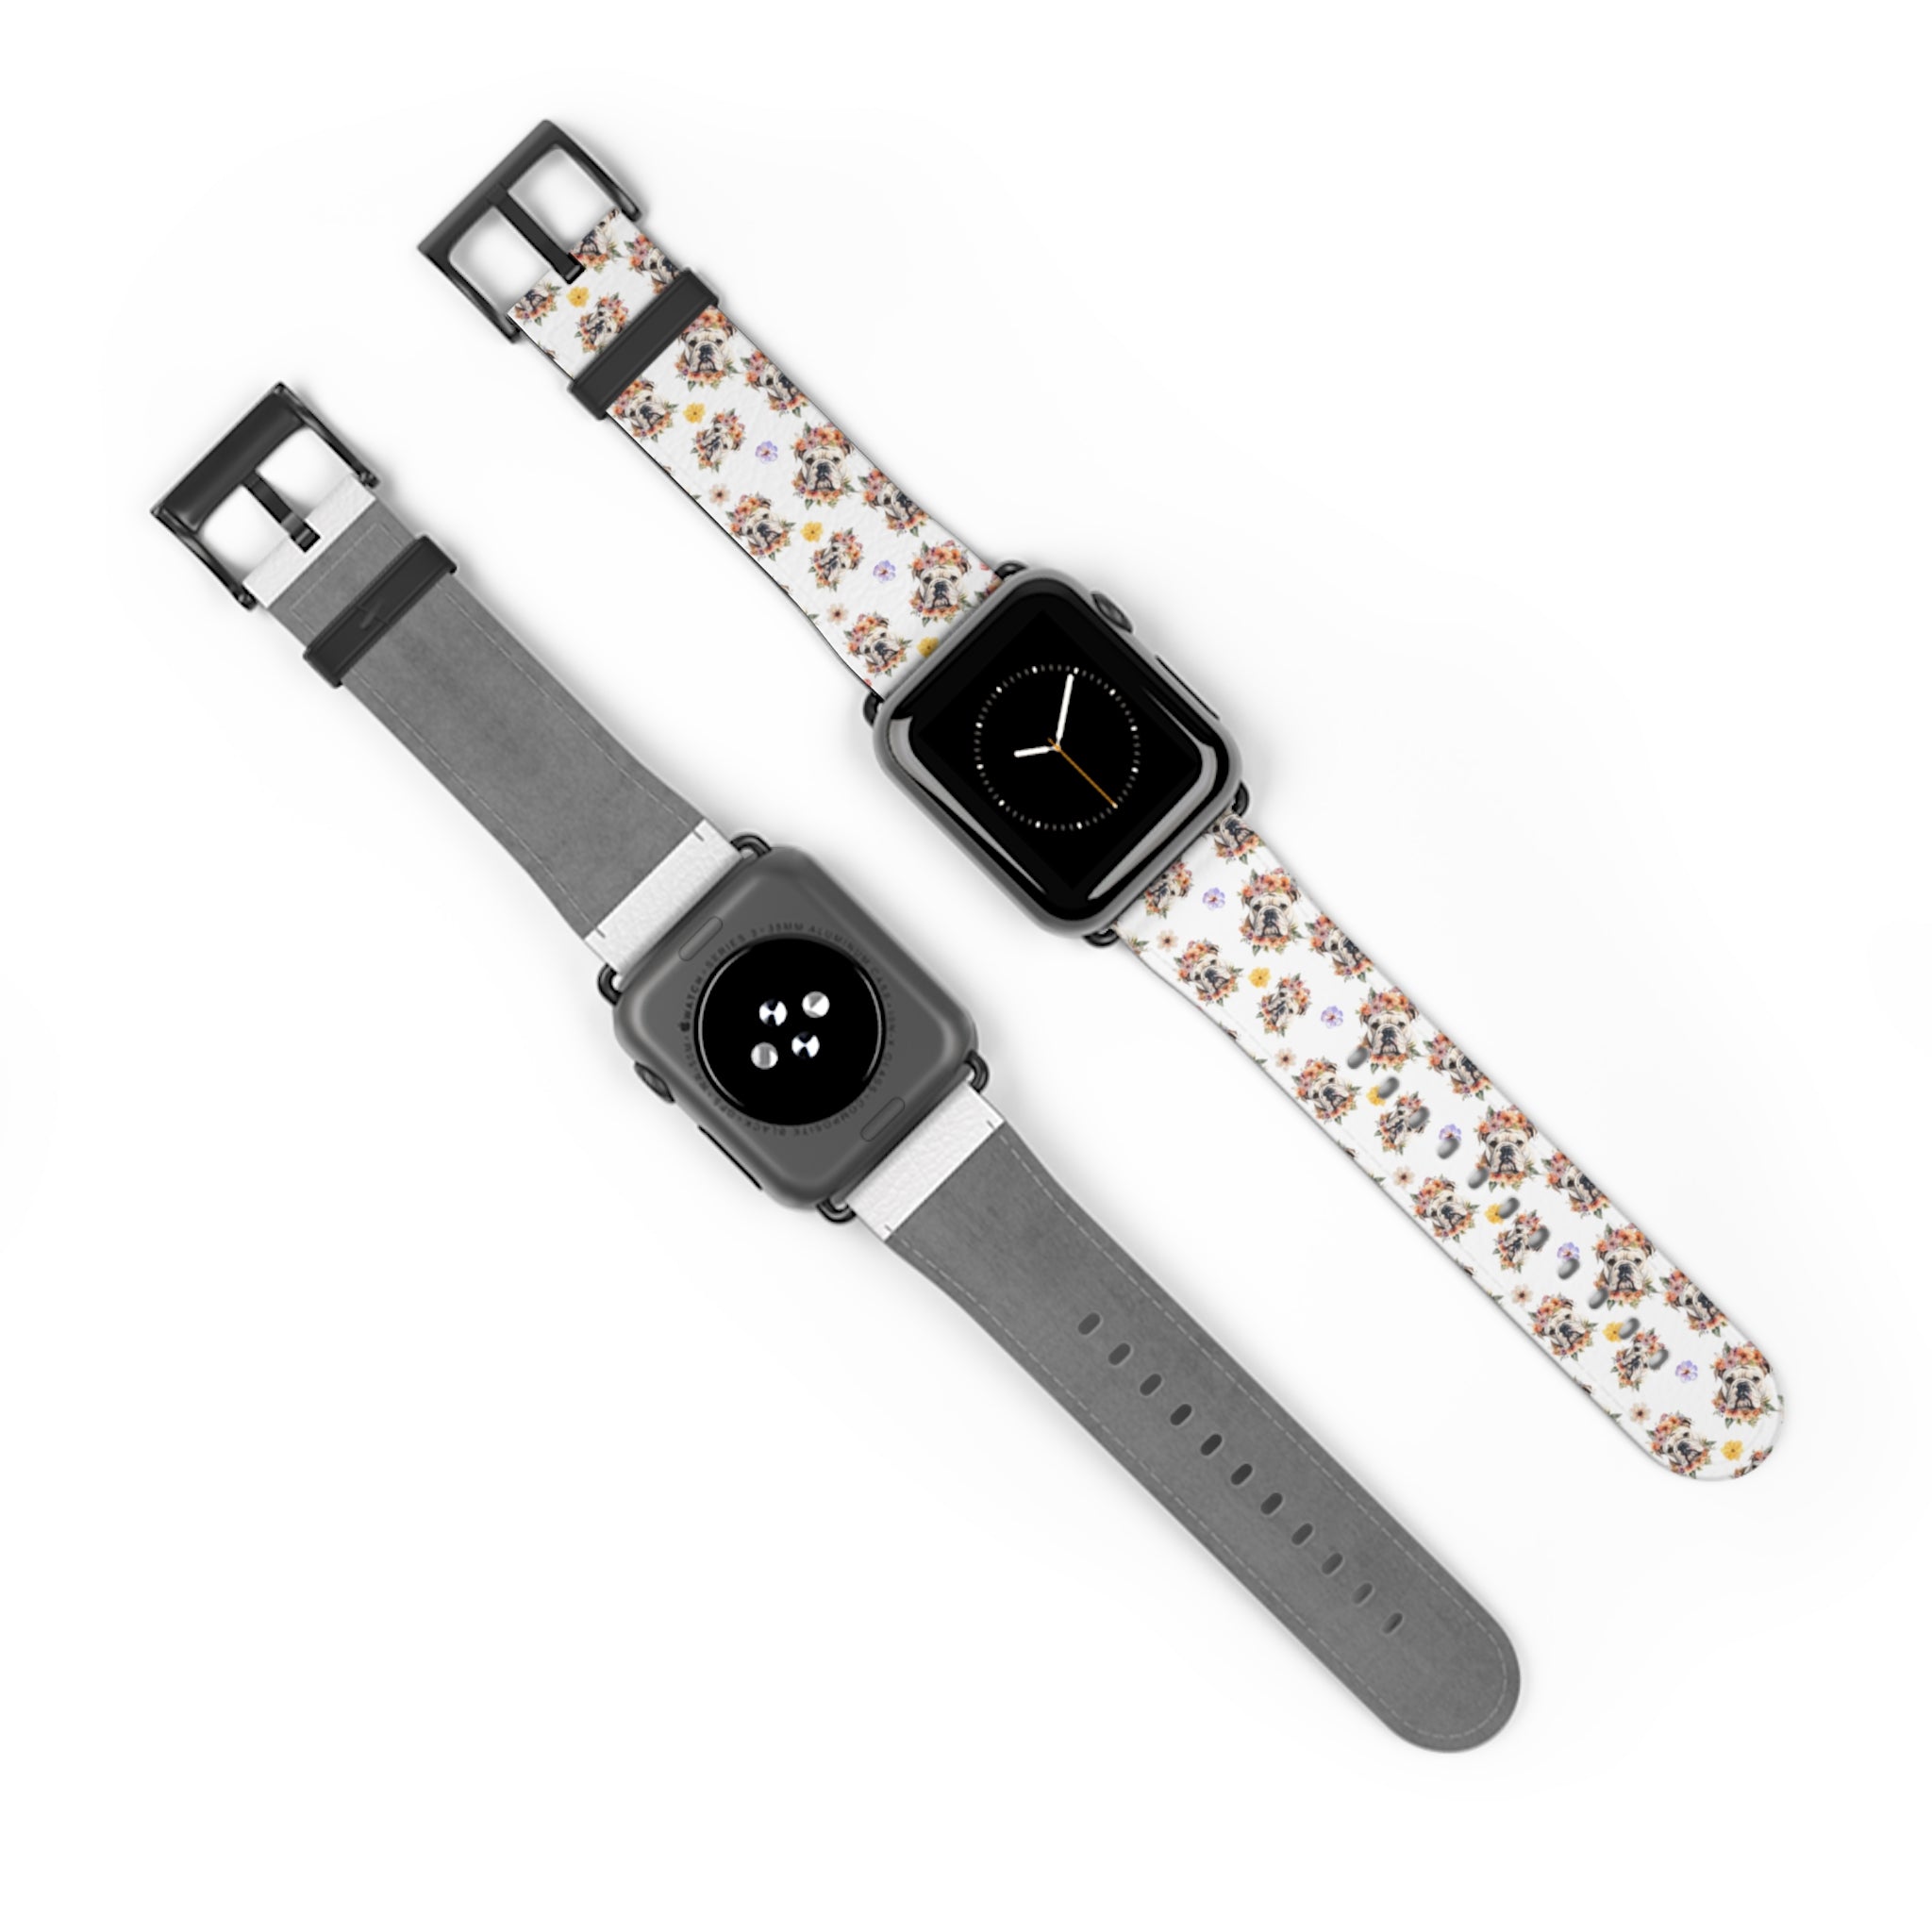 Bulldog Apple Watch Bands (English/Flower)